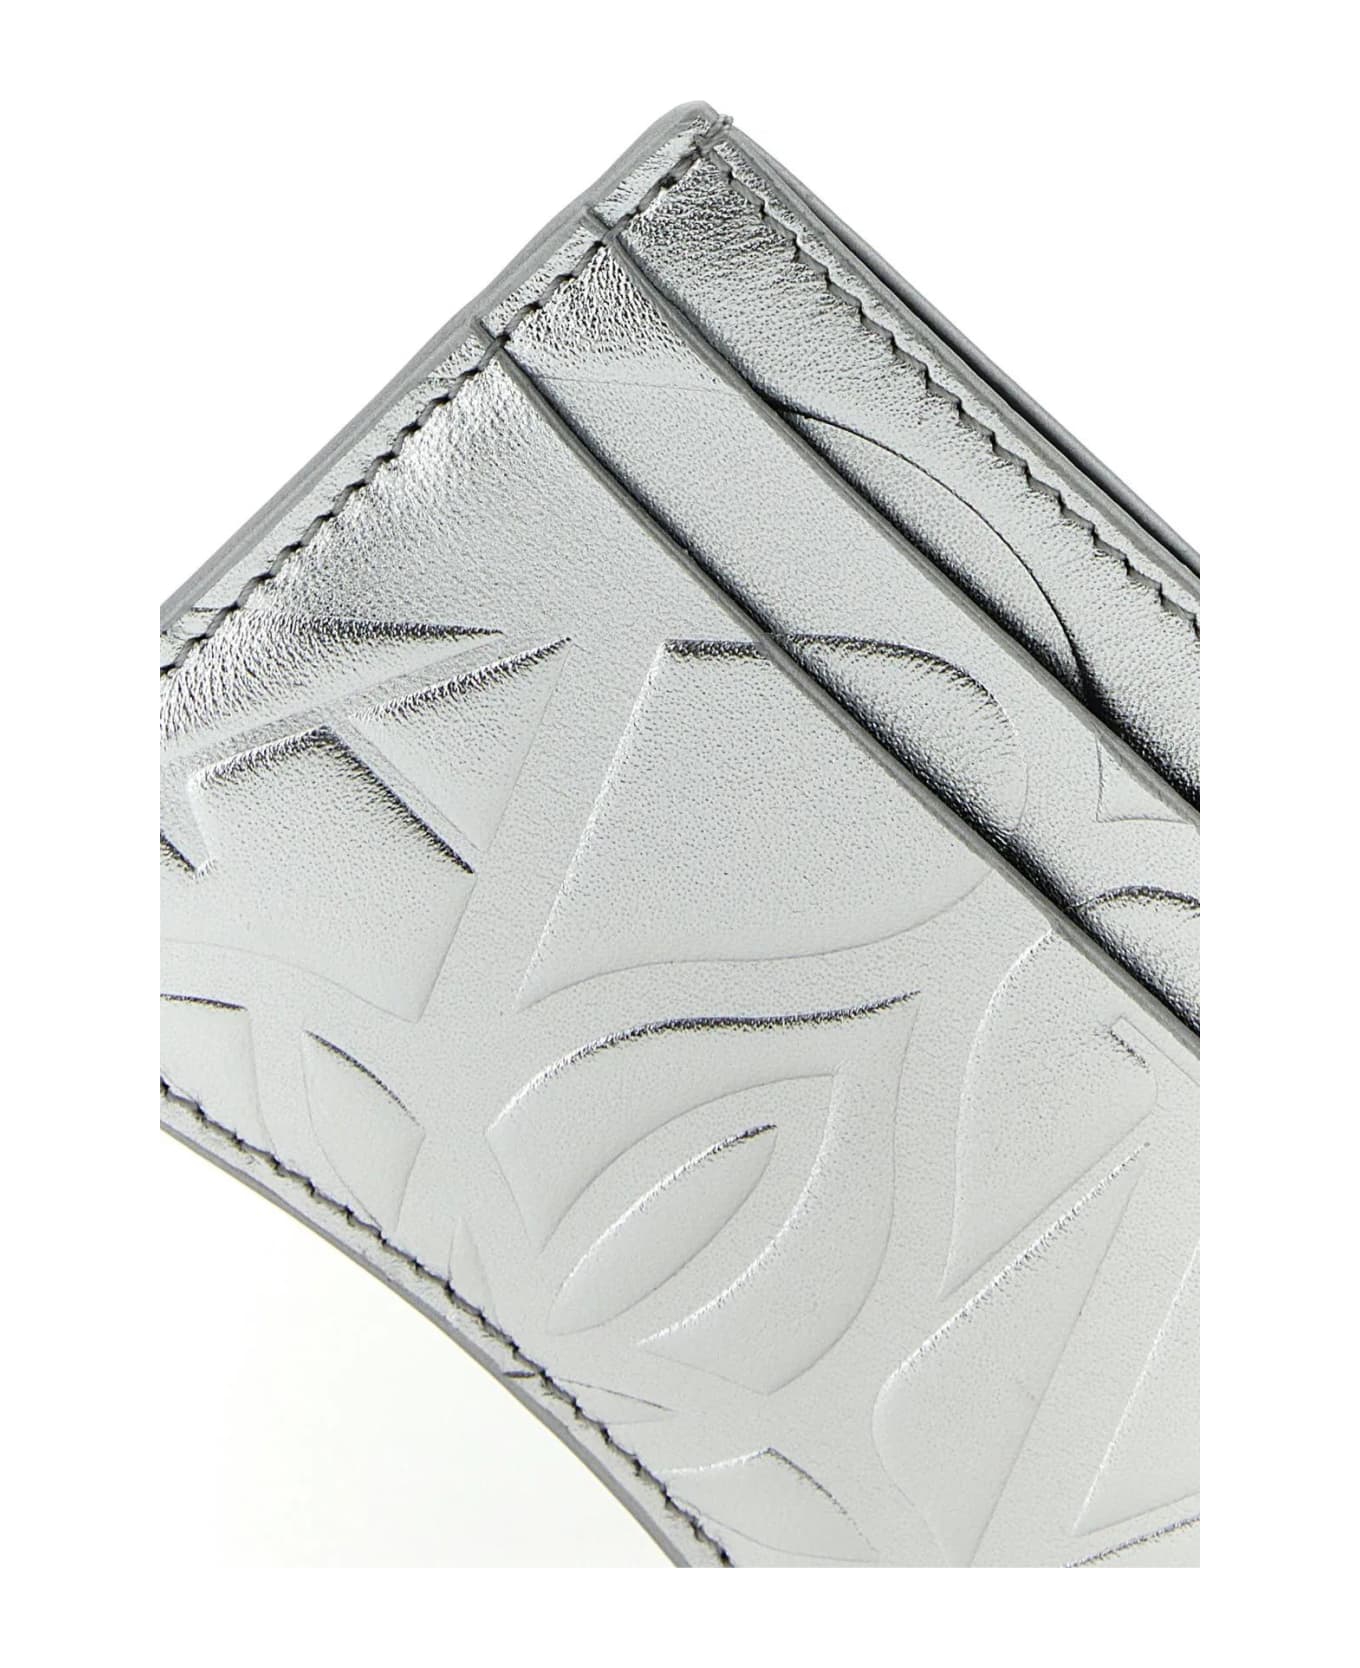 Alexander McQueen Card Holder - Silver